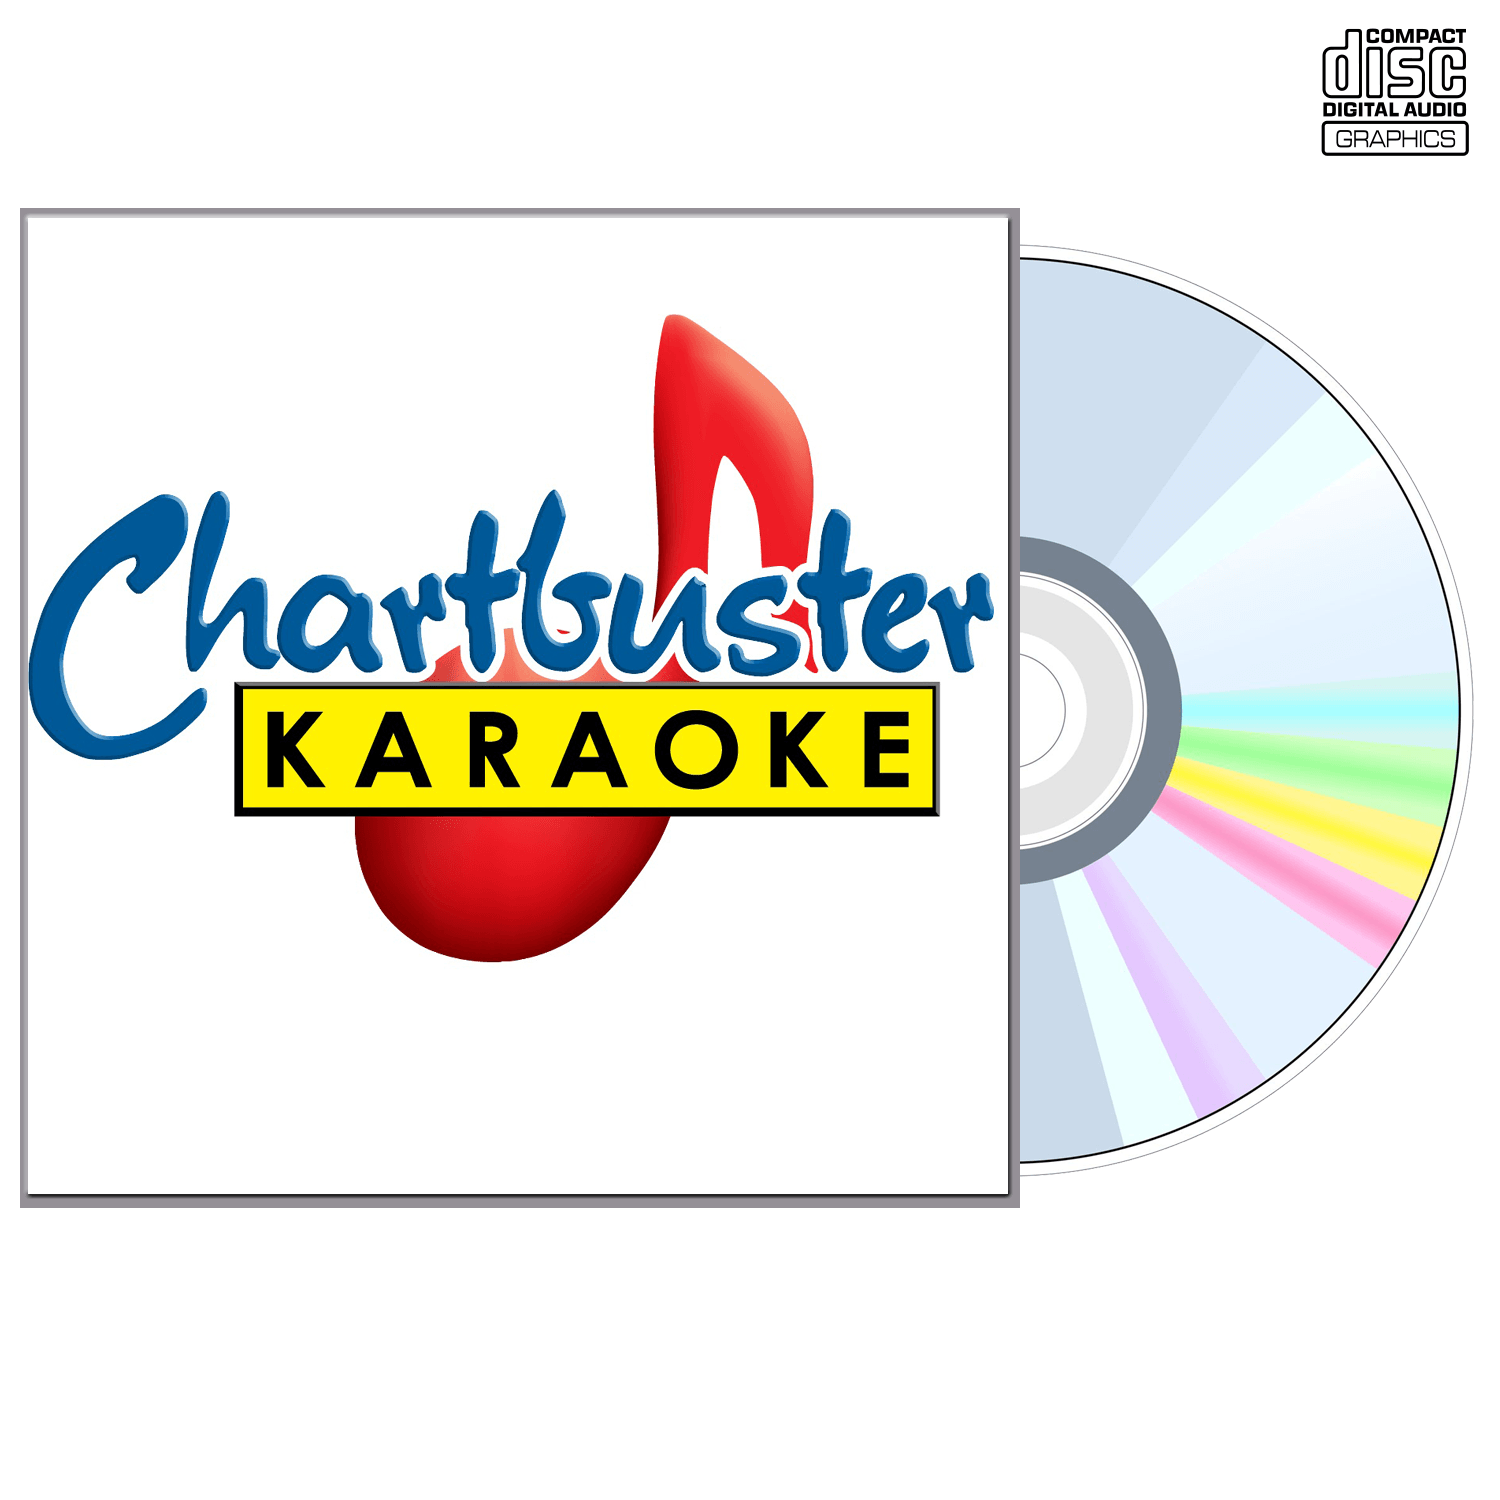 Righteous Brothers - CD+G - Chartbuster Karaoke - Karaoke Home Entertainment